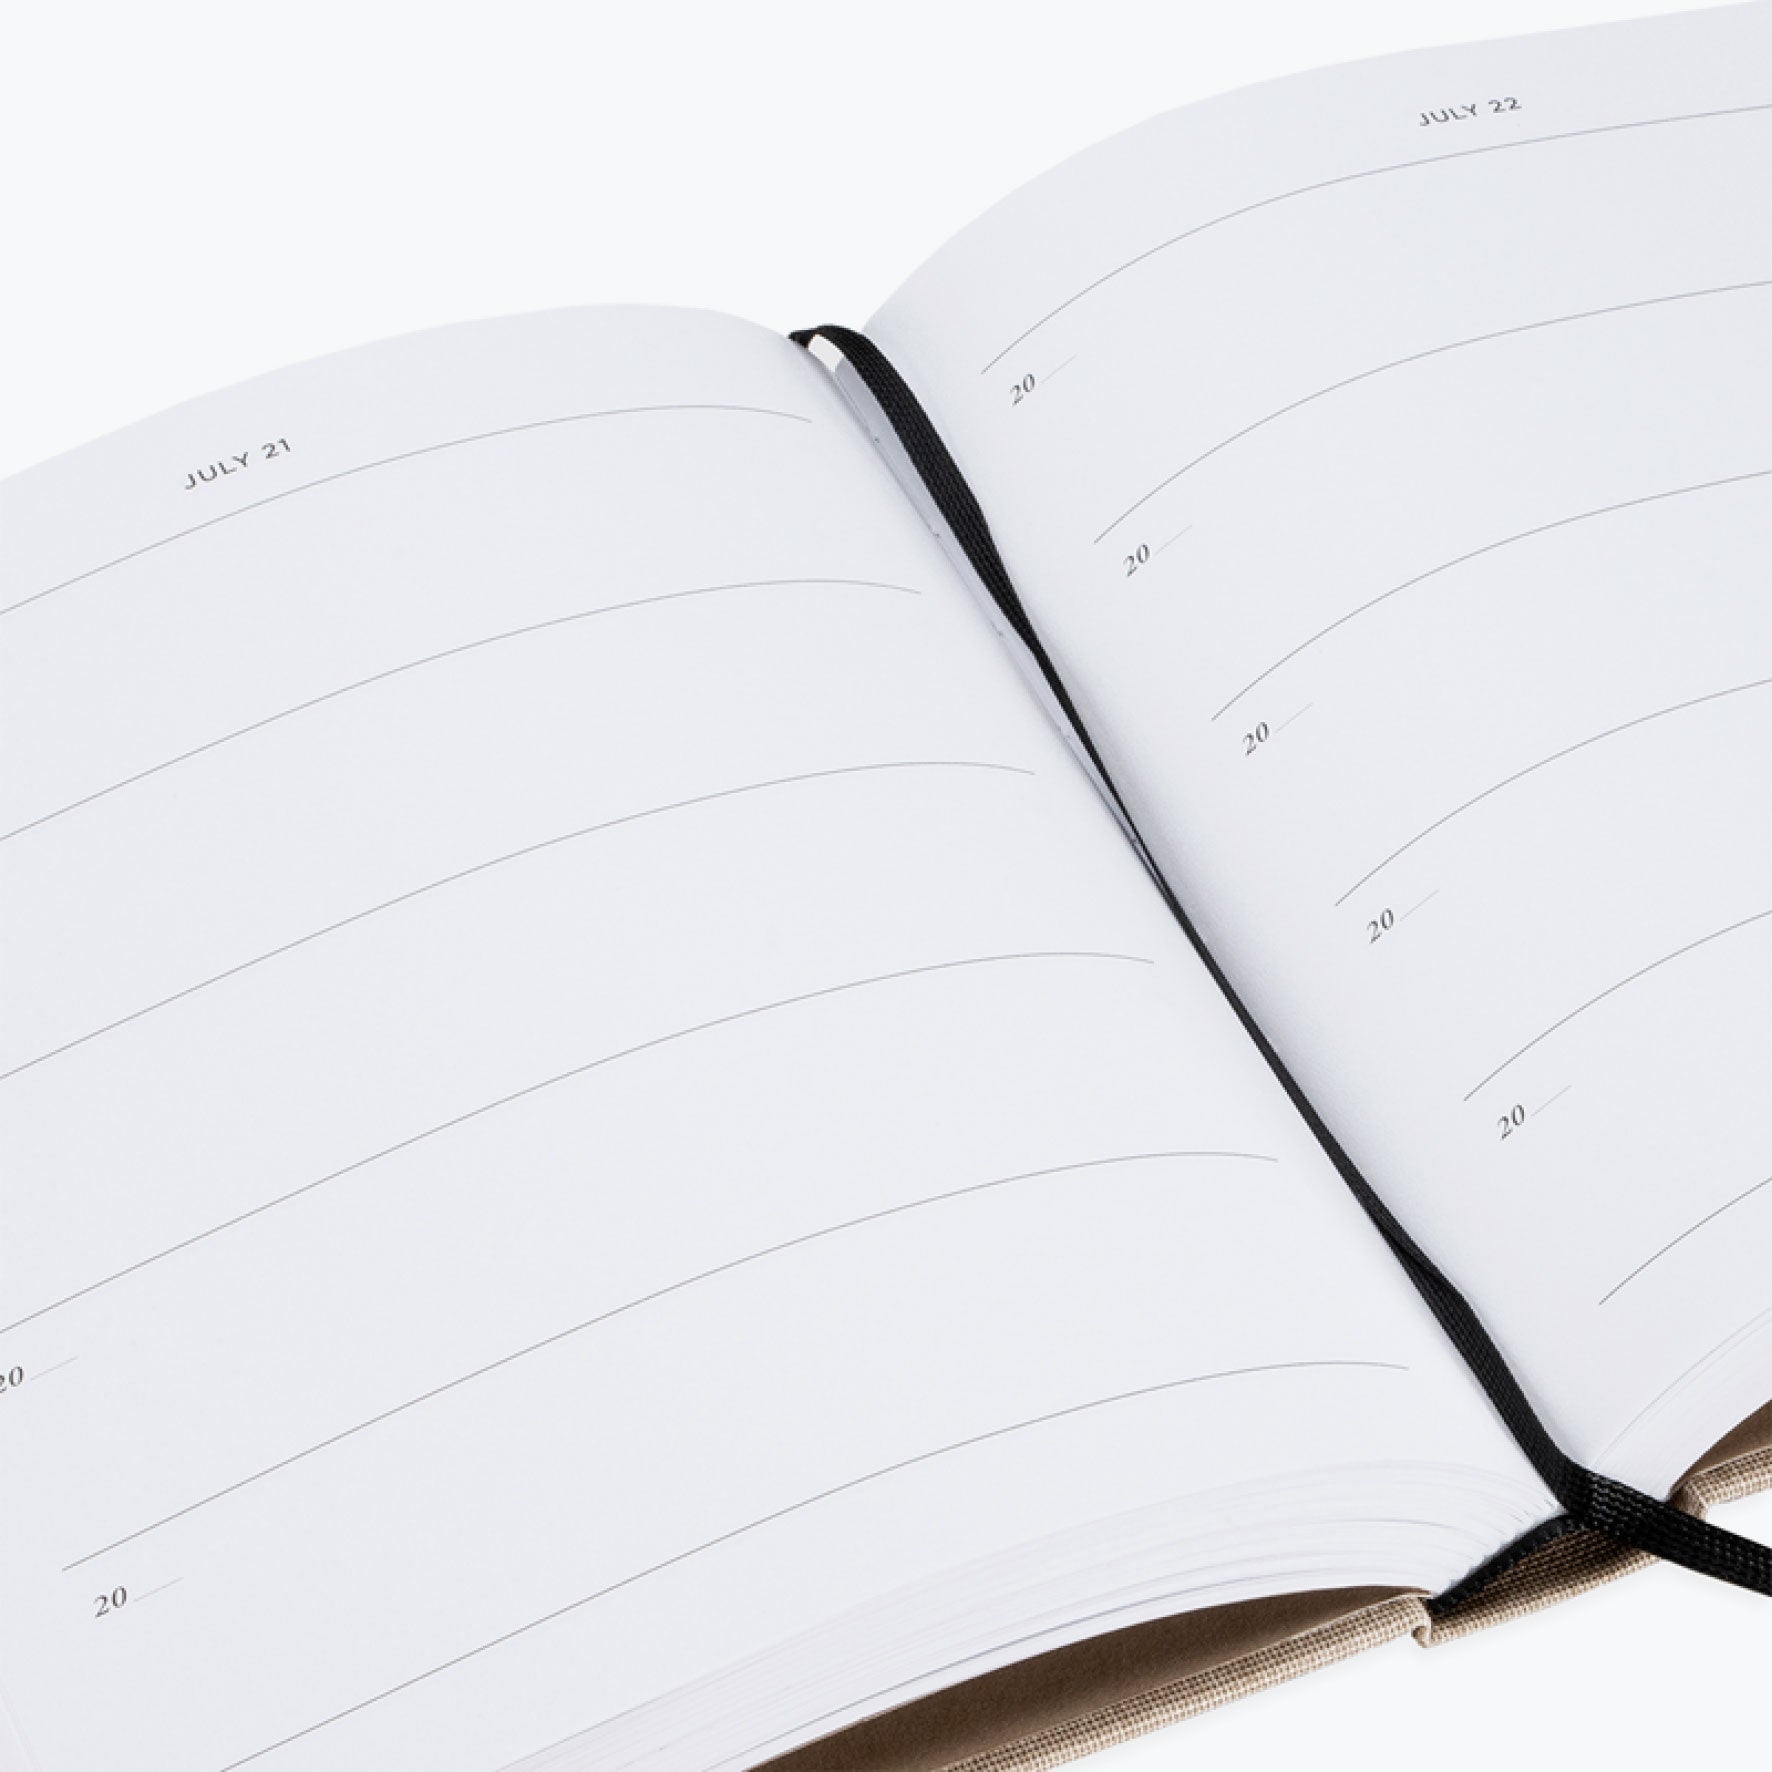 Bookbinders Design - Planner - 5 Year Diary - Sandbrown